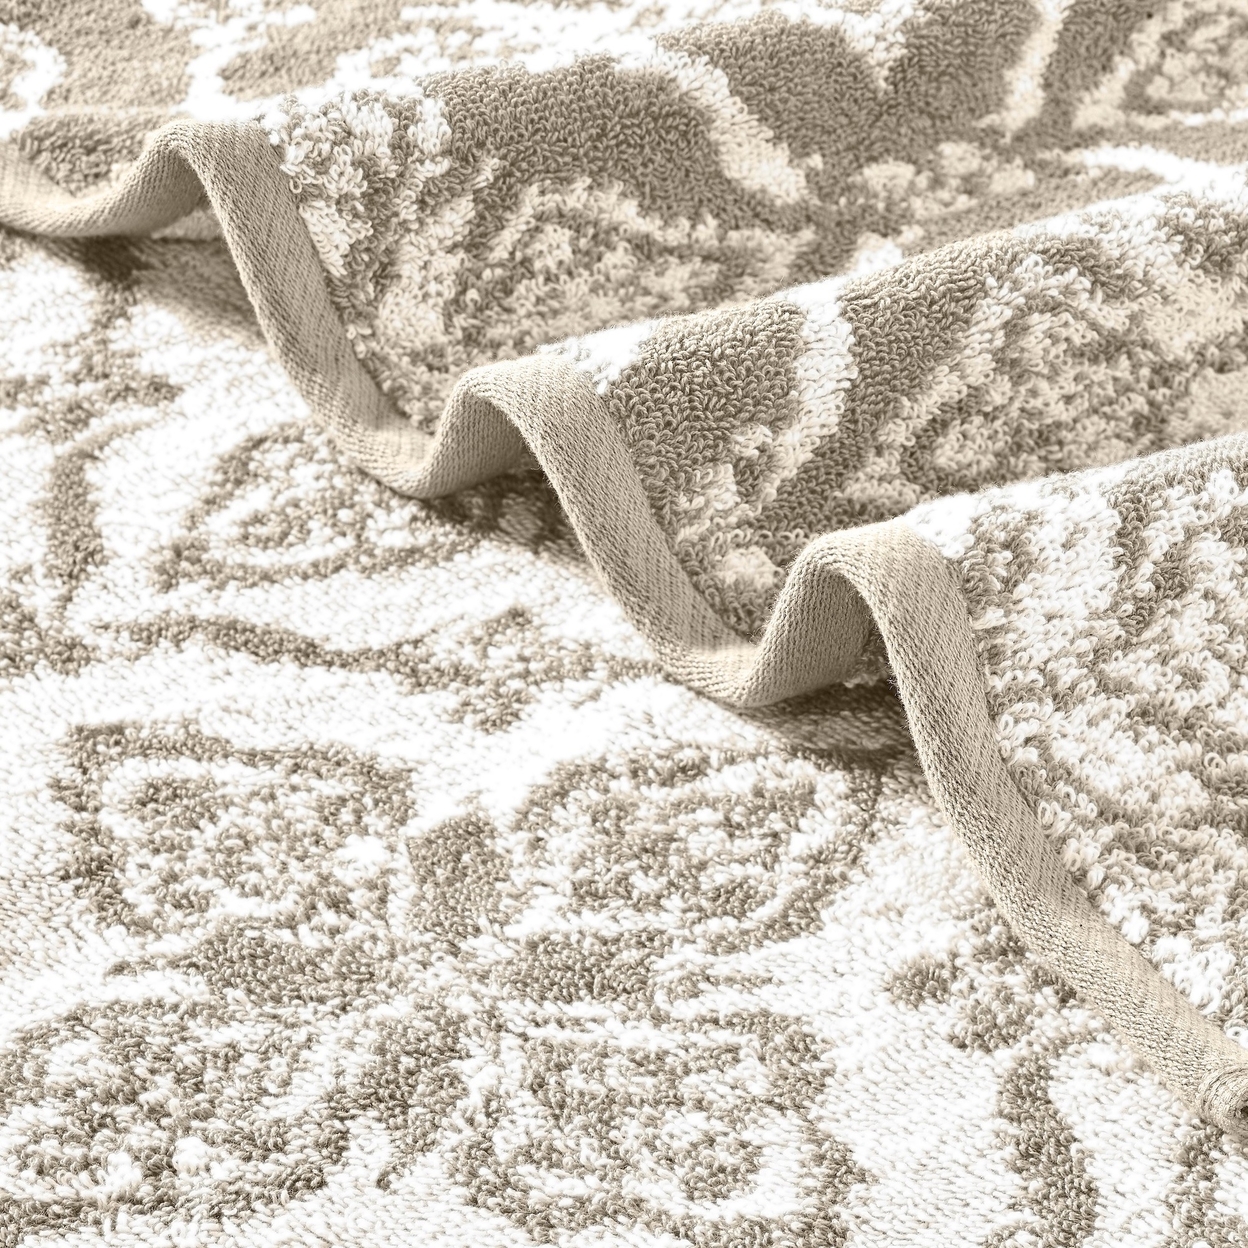 Naja 6pc Cotton Towel Set, Jacquard Pattern, White, Beige By The Urban Port- Saltoro Sherpi